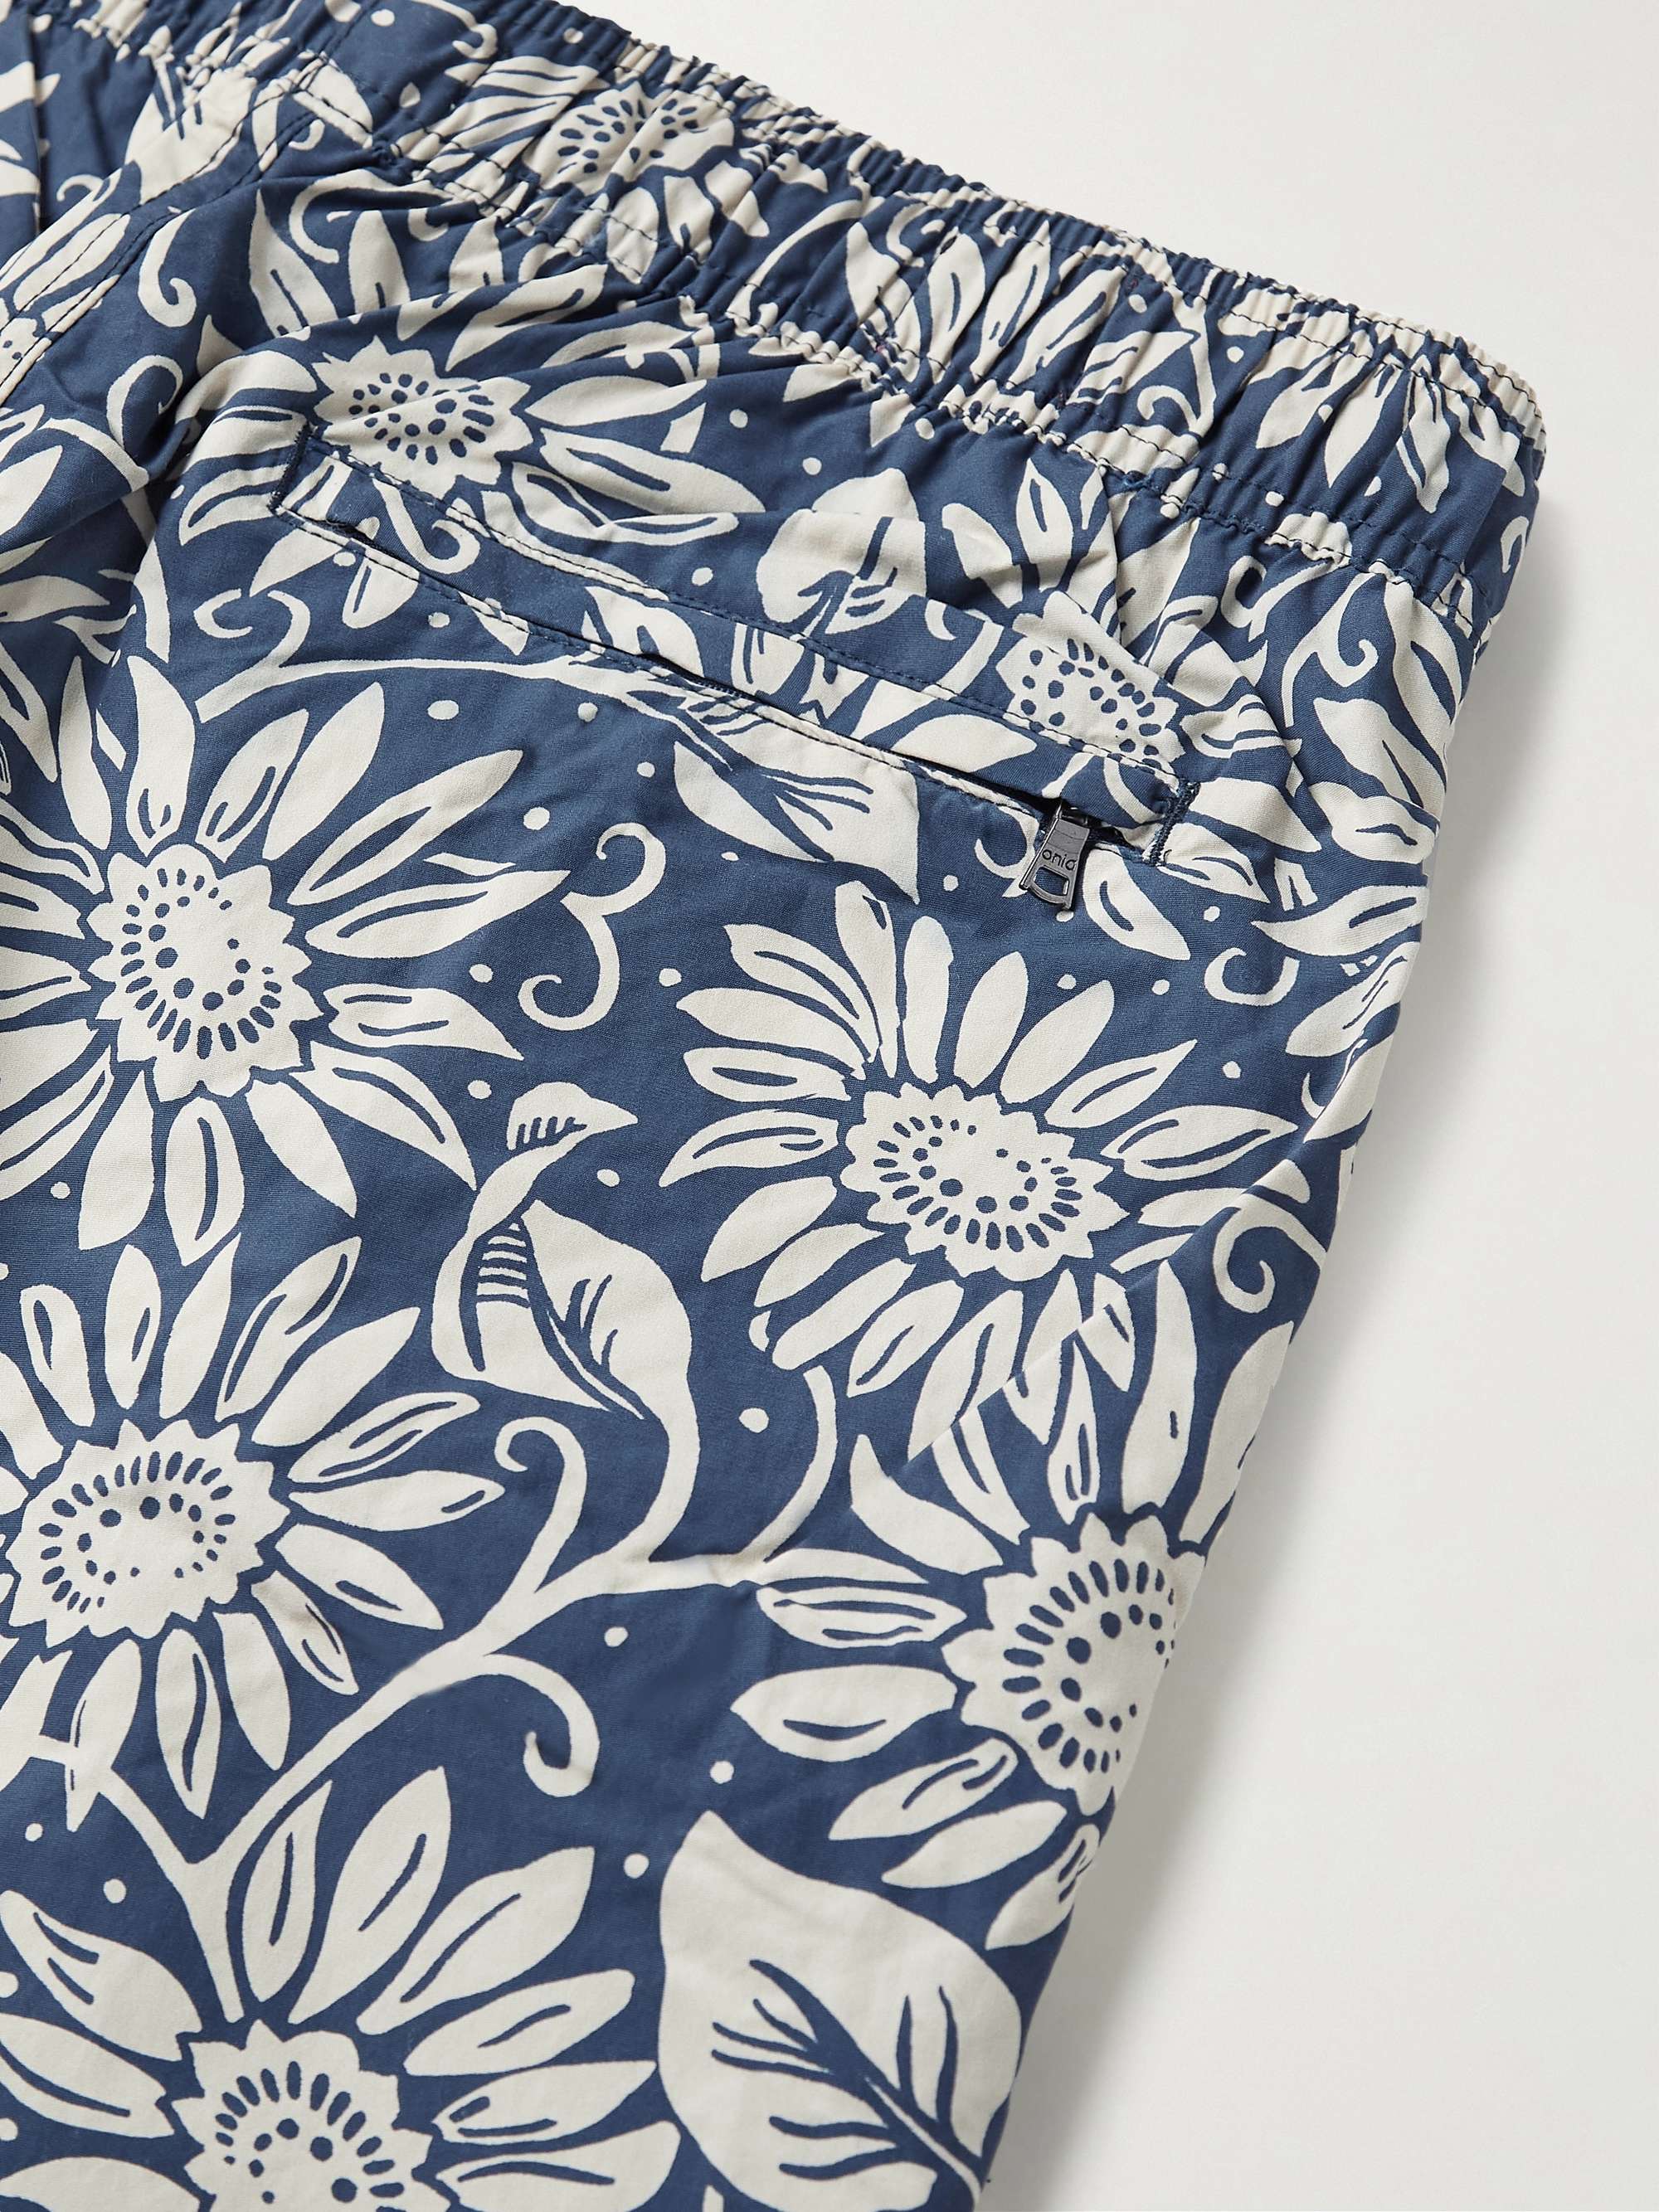 ONIA Charles Mid-Length Floral-Print Swim Shorts